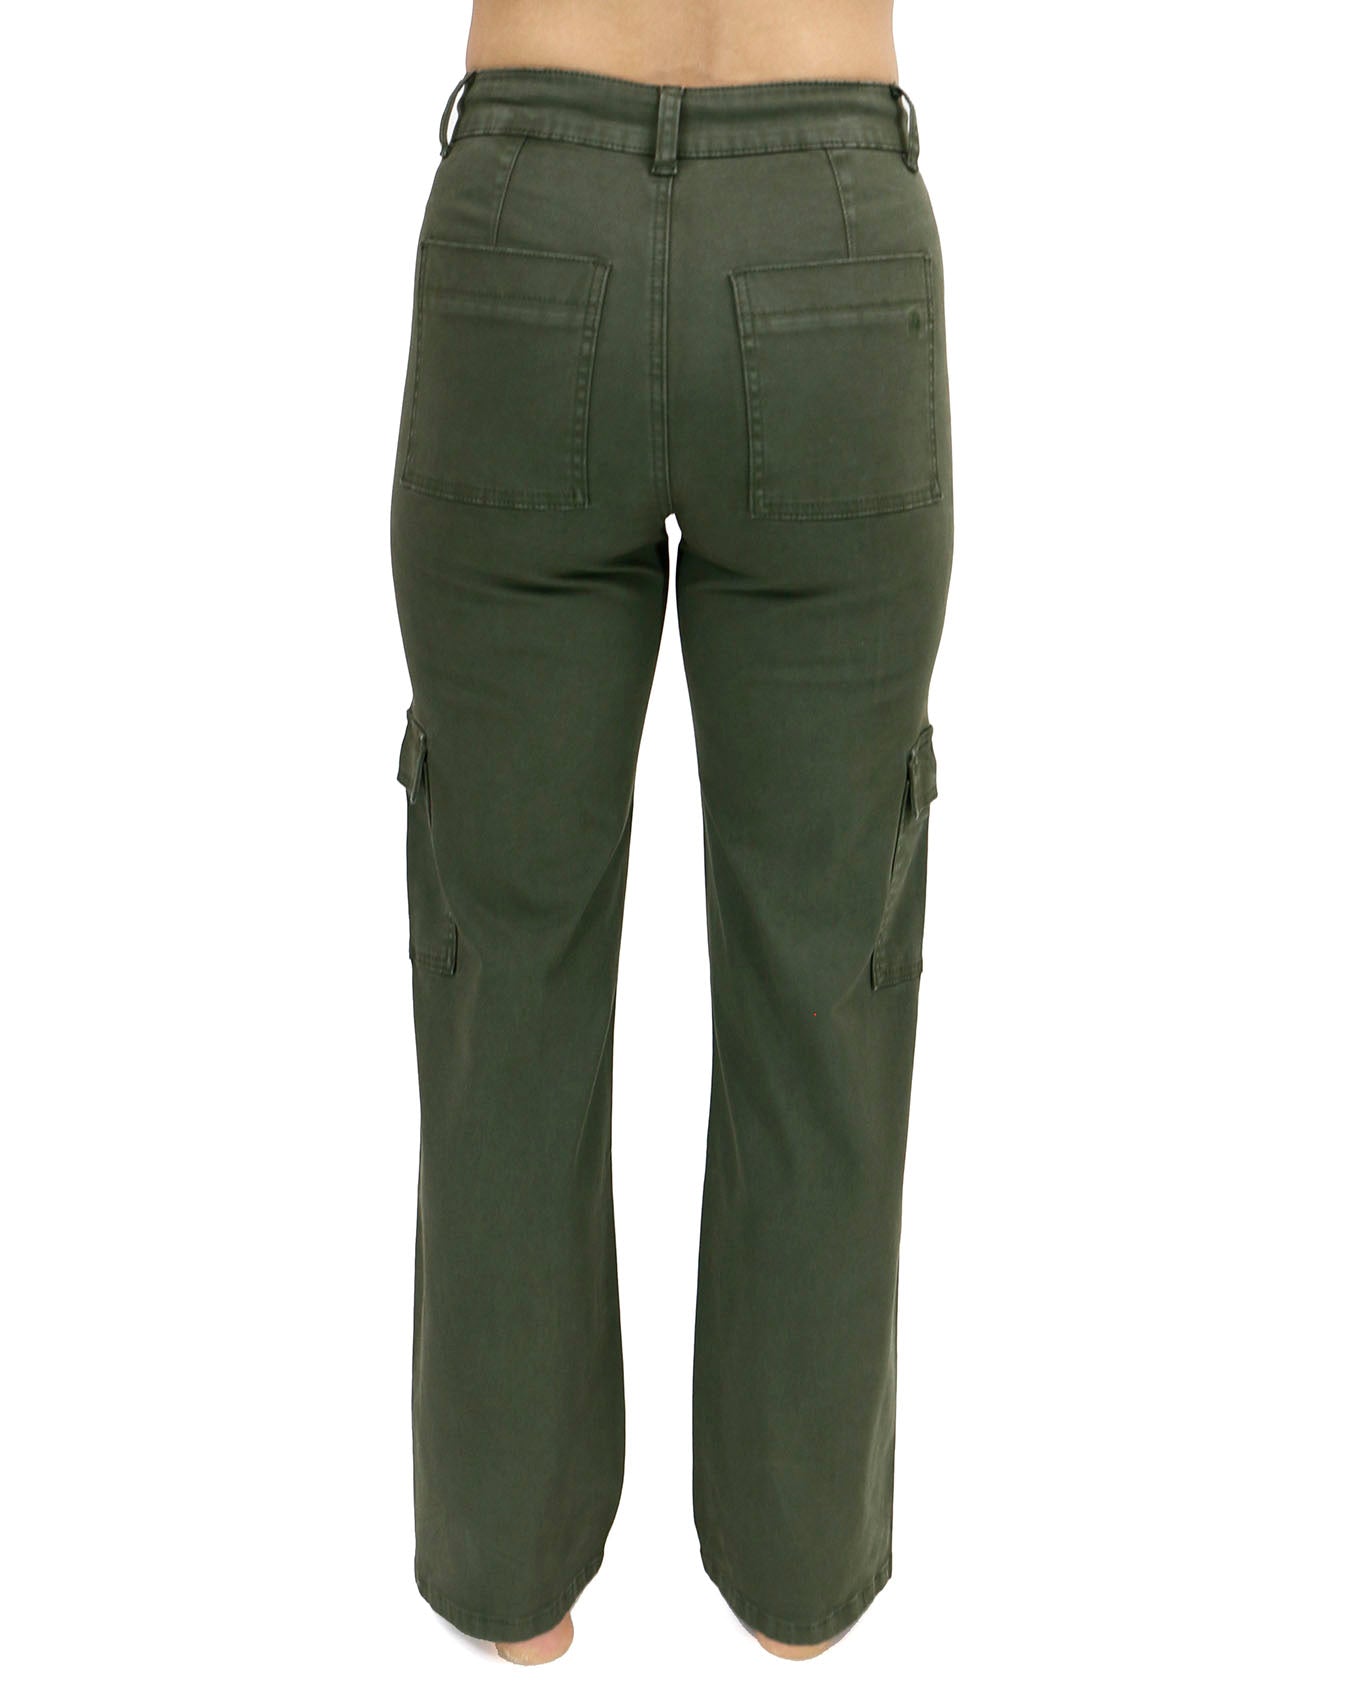 Womens Cargo Pants Black Green Tan - Womens Hipster Cargo Pants